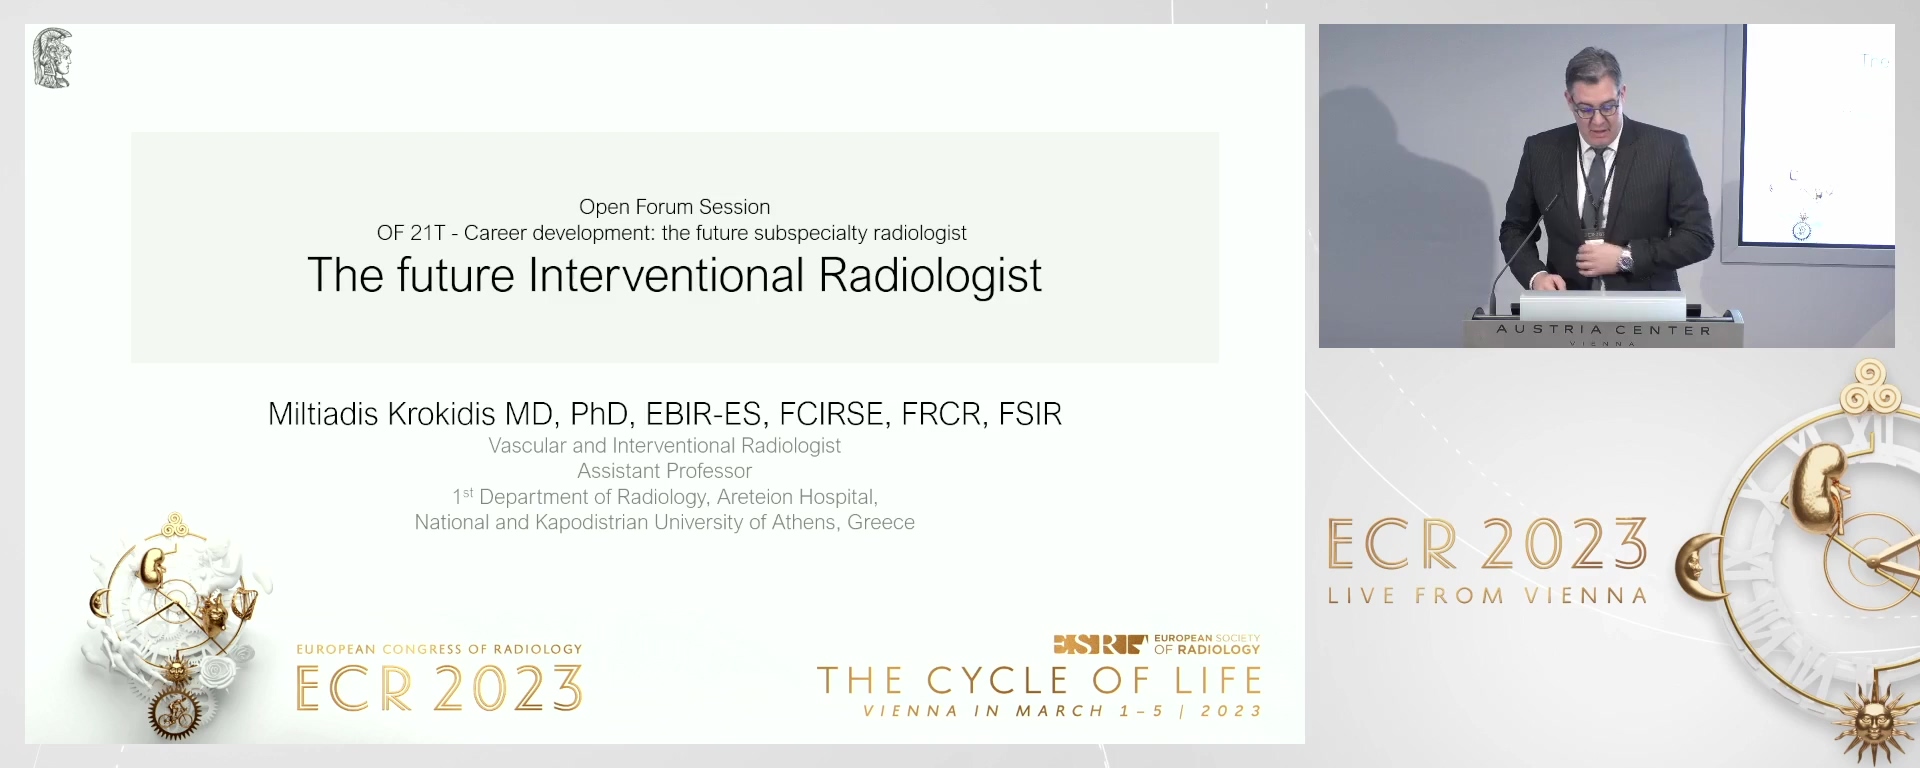 The future interventional radiologist